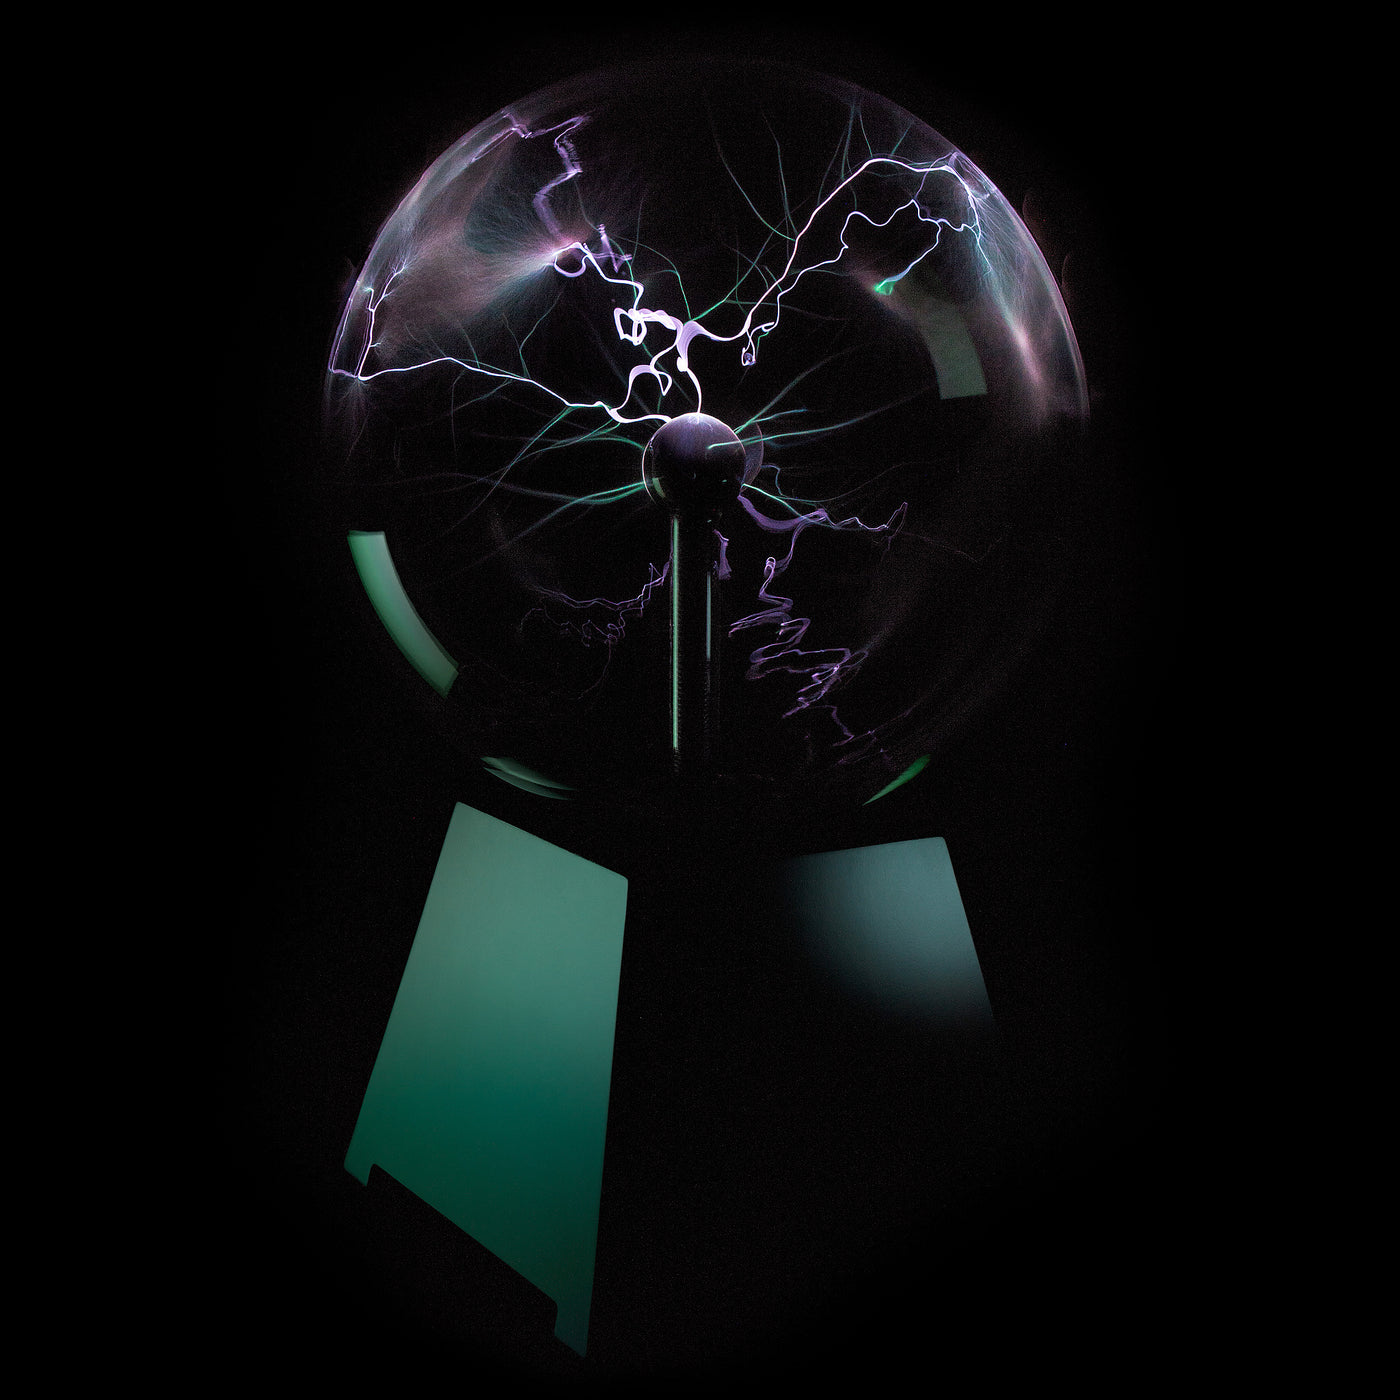 “Emerald Fury” Continuum Series Plasma Globe